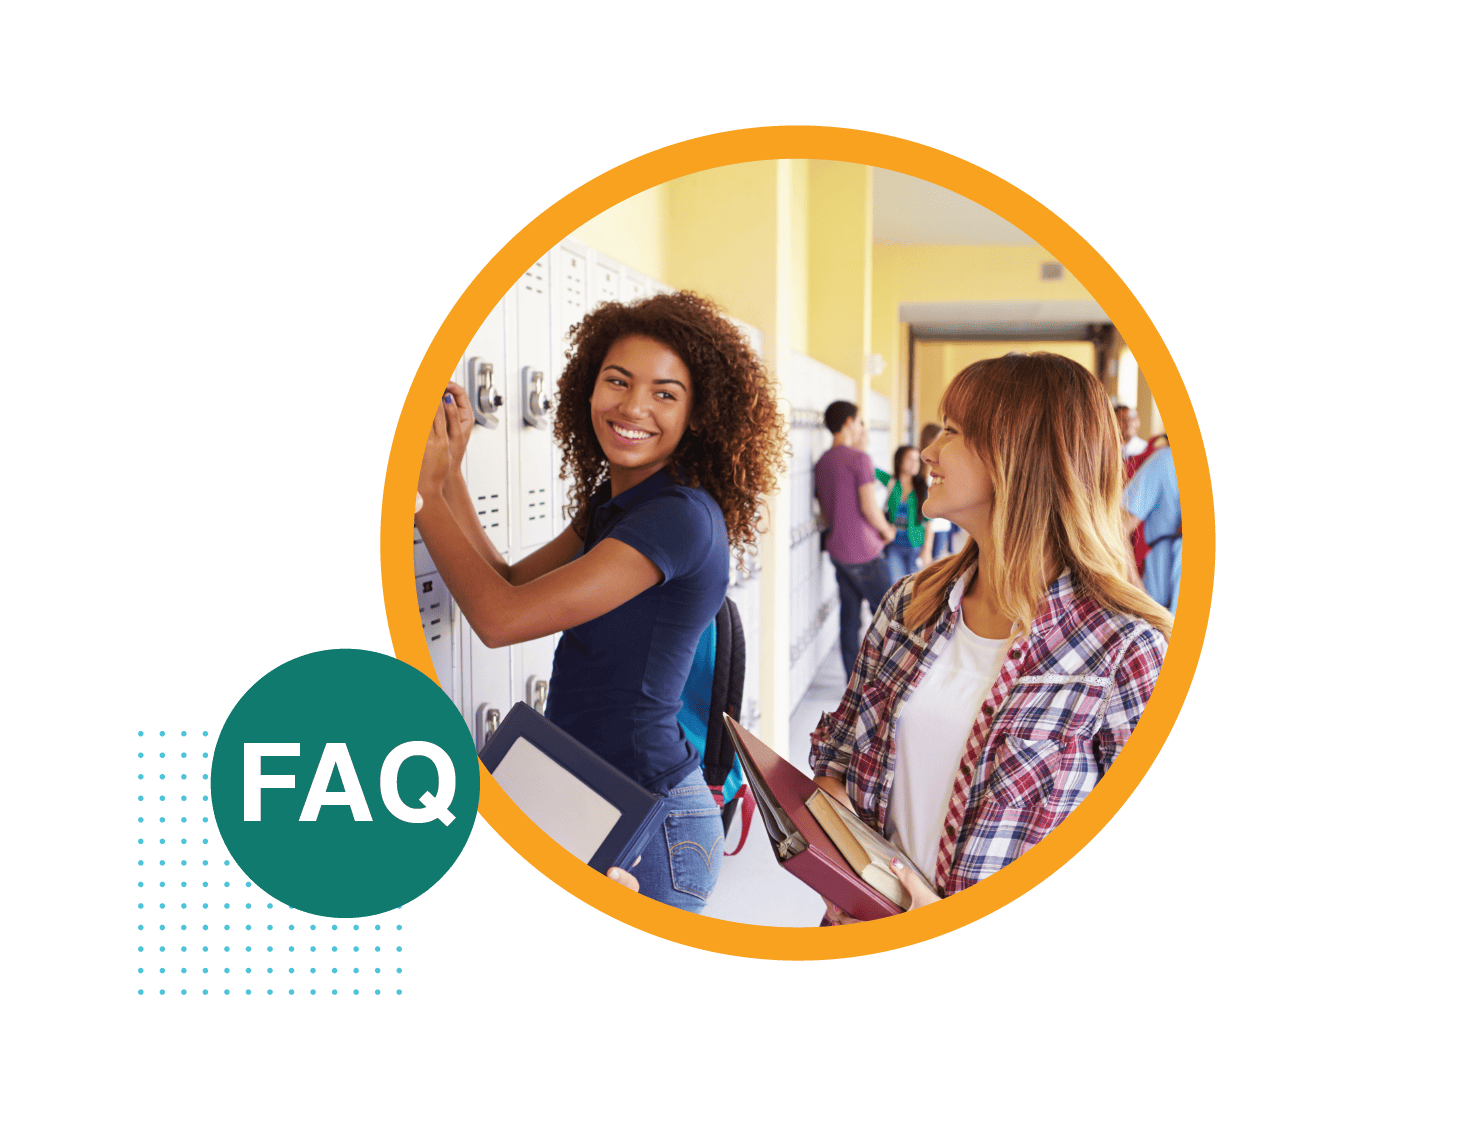 FAQ - High School Students Chatting in the Hallway